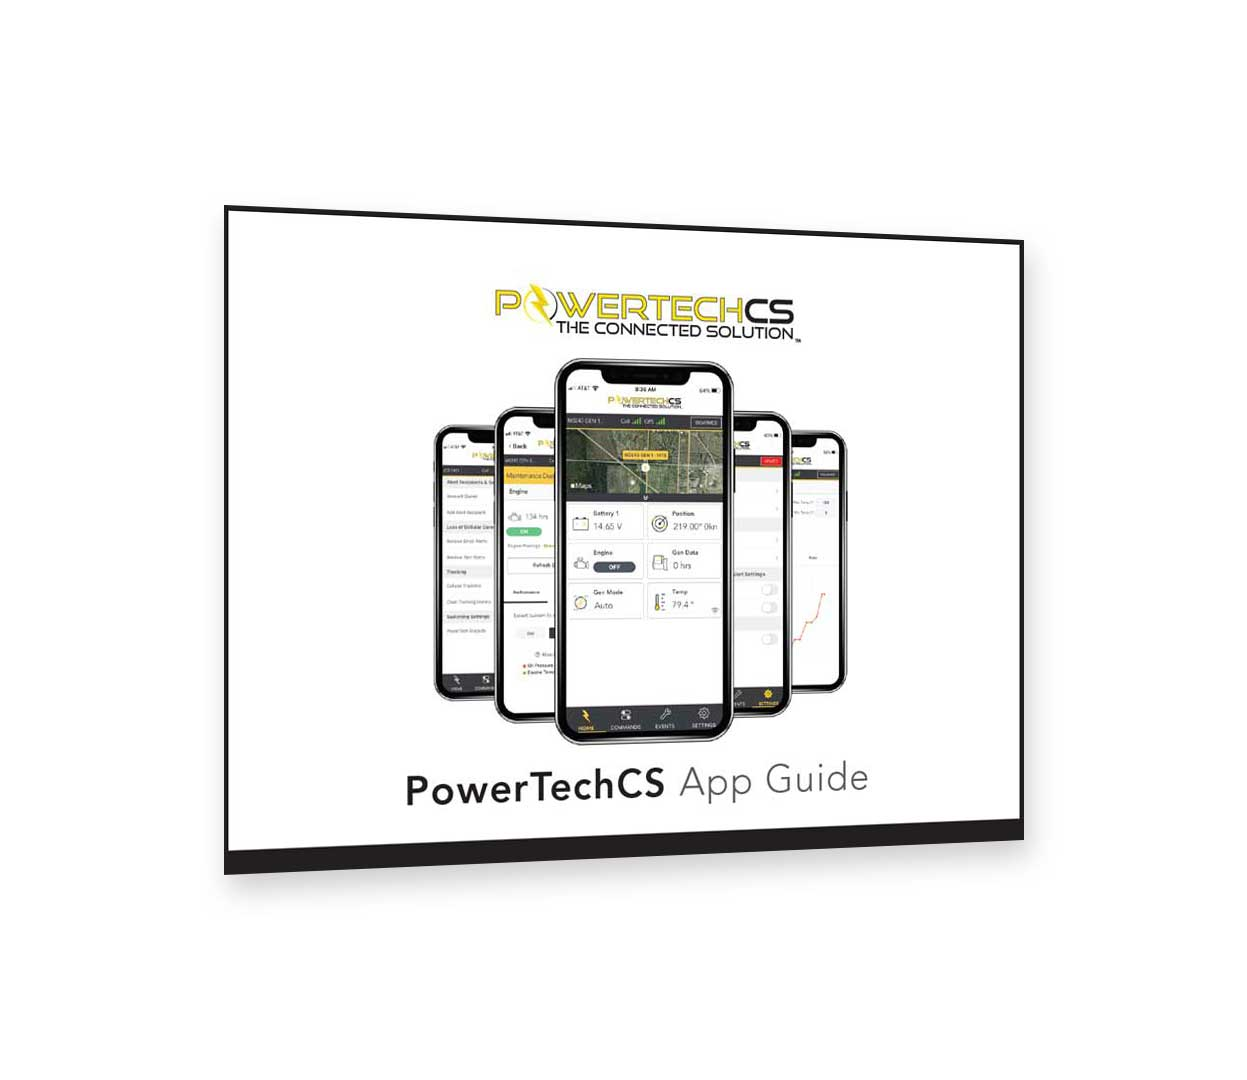 PowerTechCS App Guide